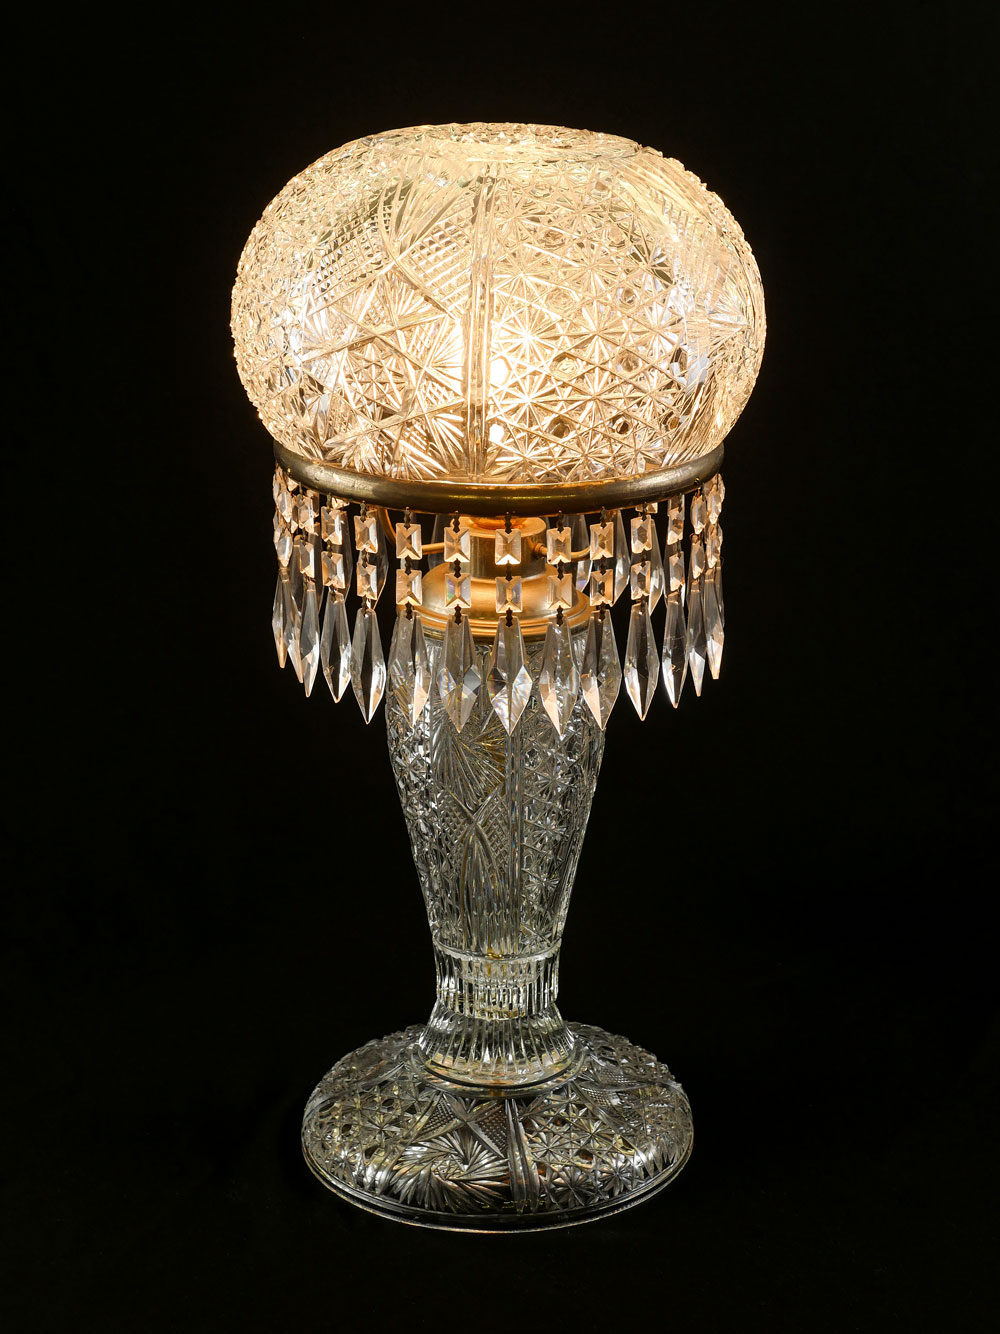 LARGE CUT GLASS LAMP: Large glass